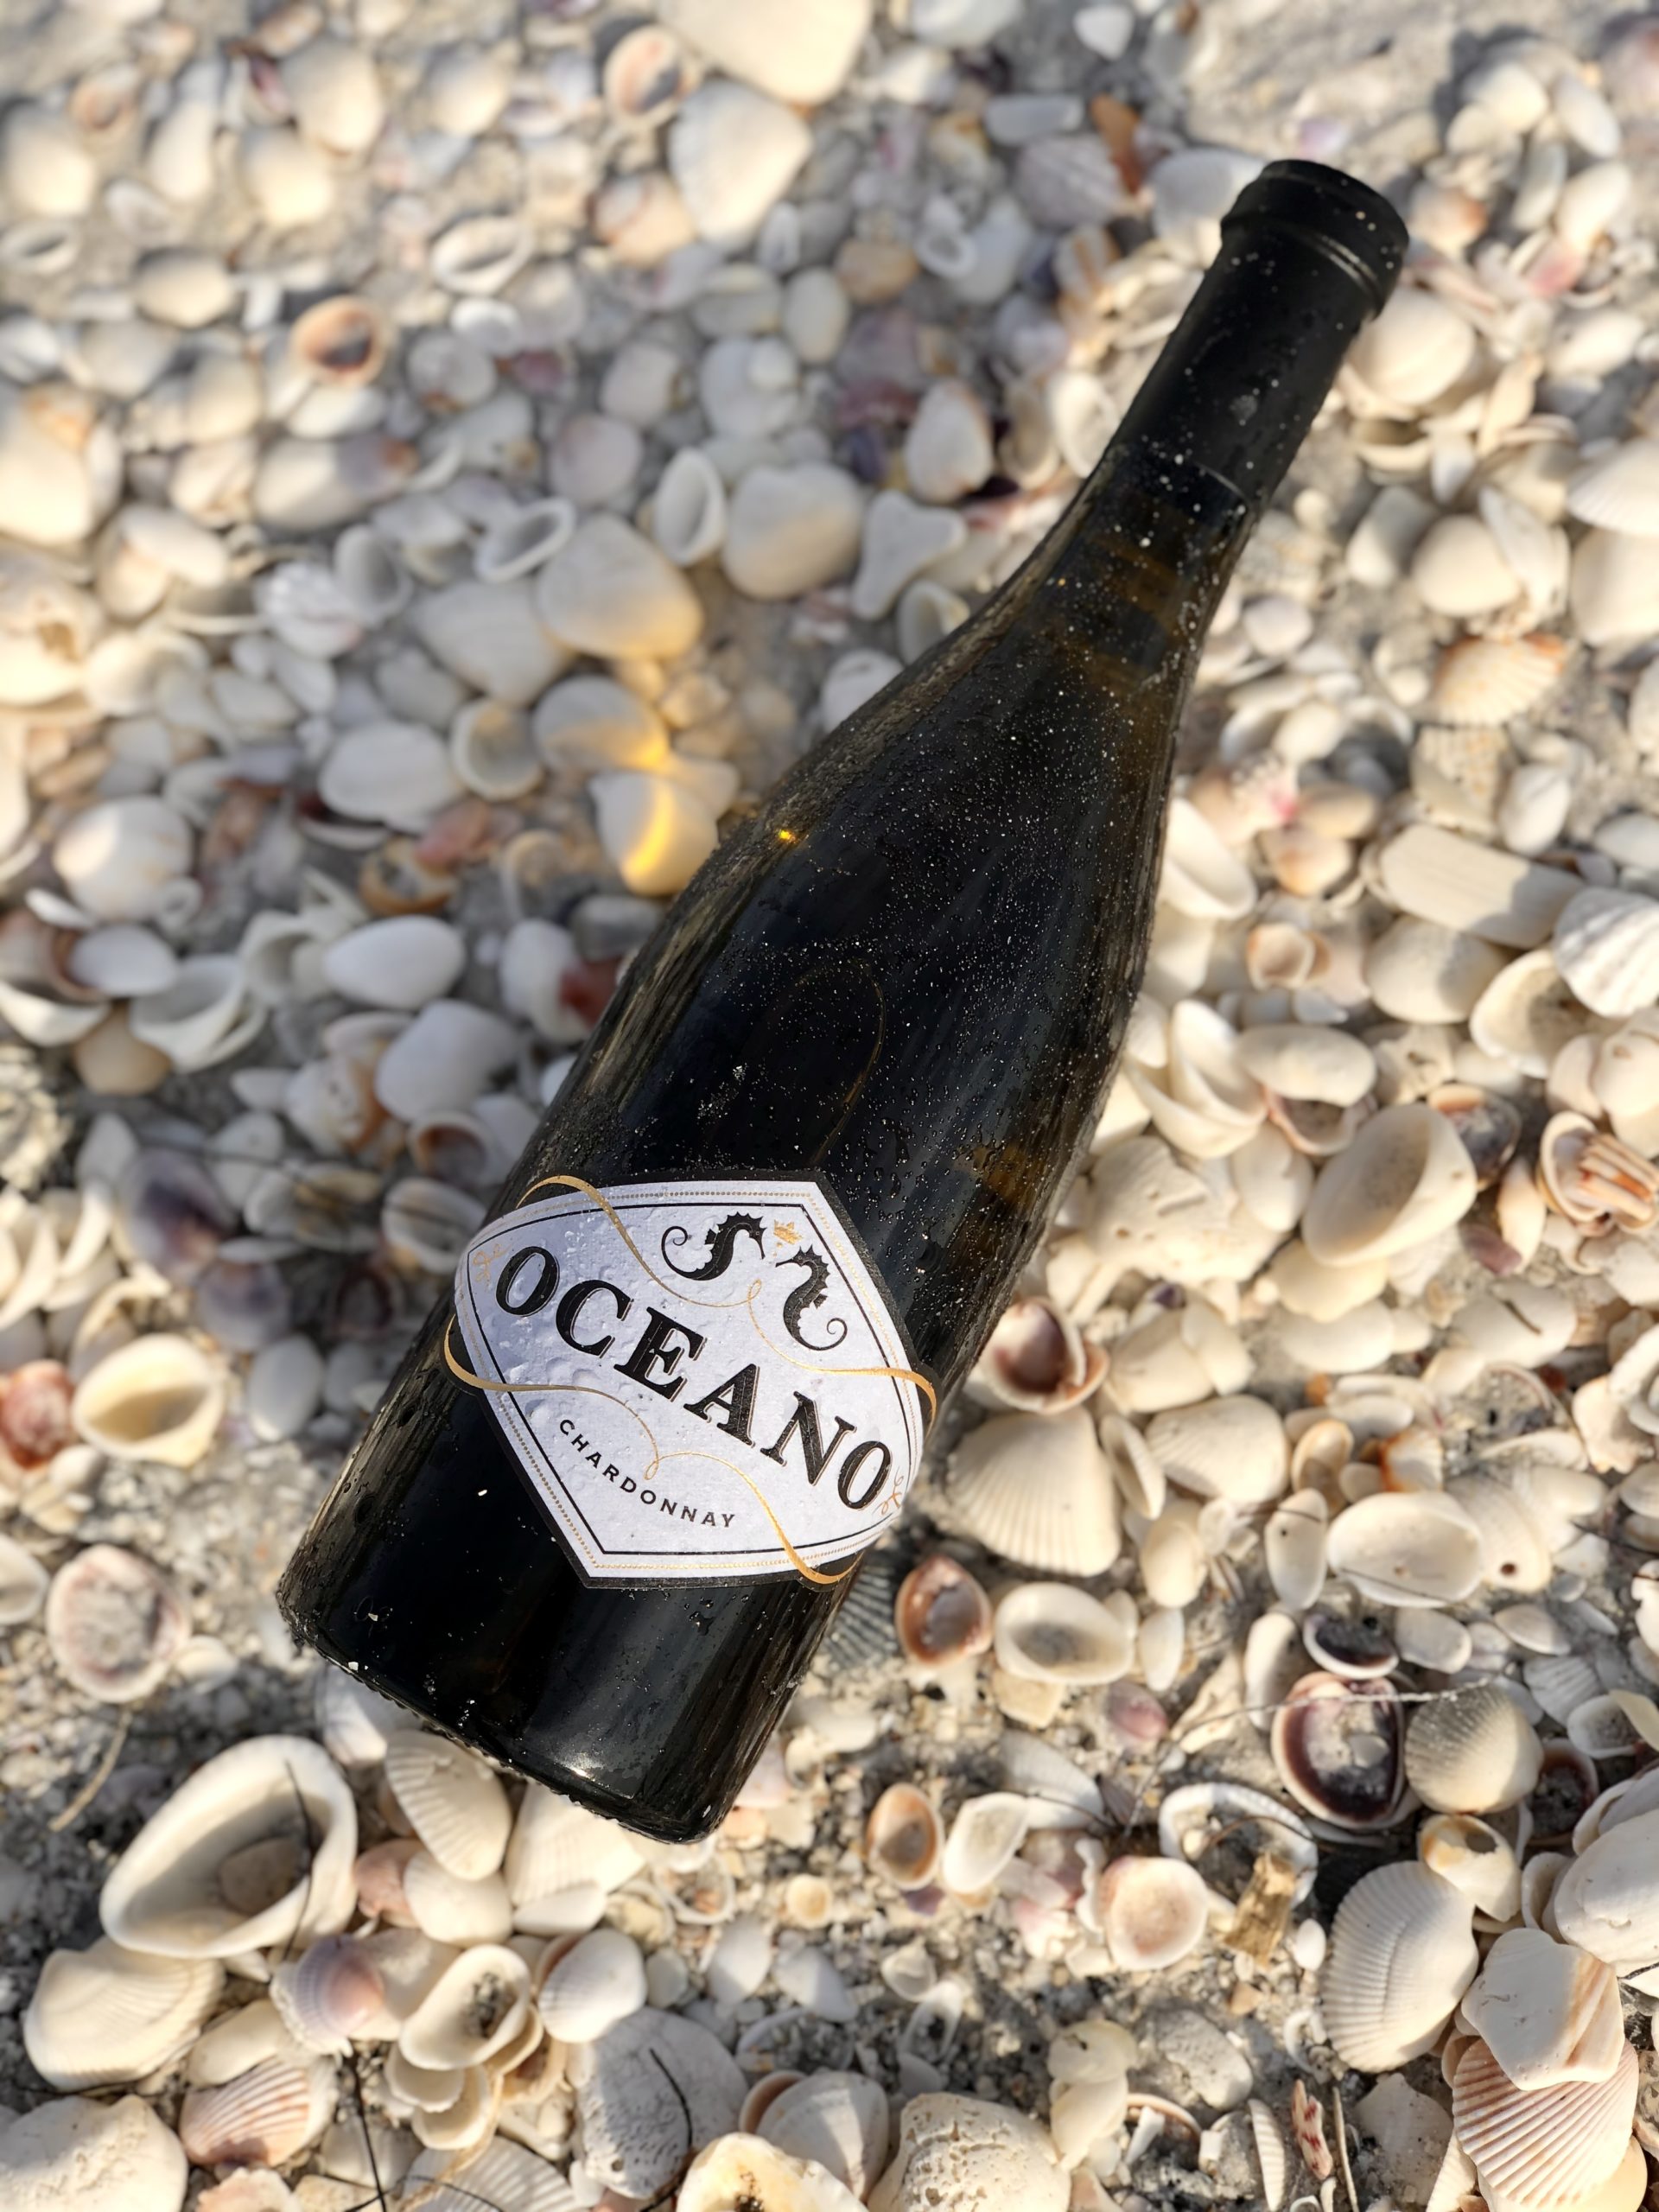 Oceano Wine bottle laid on beach sand and seashells